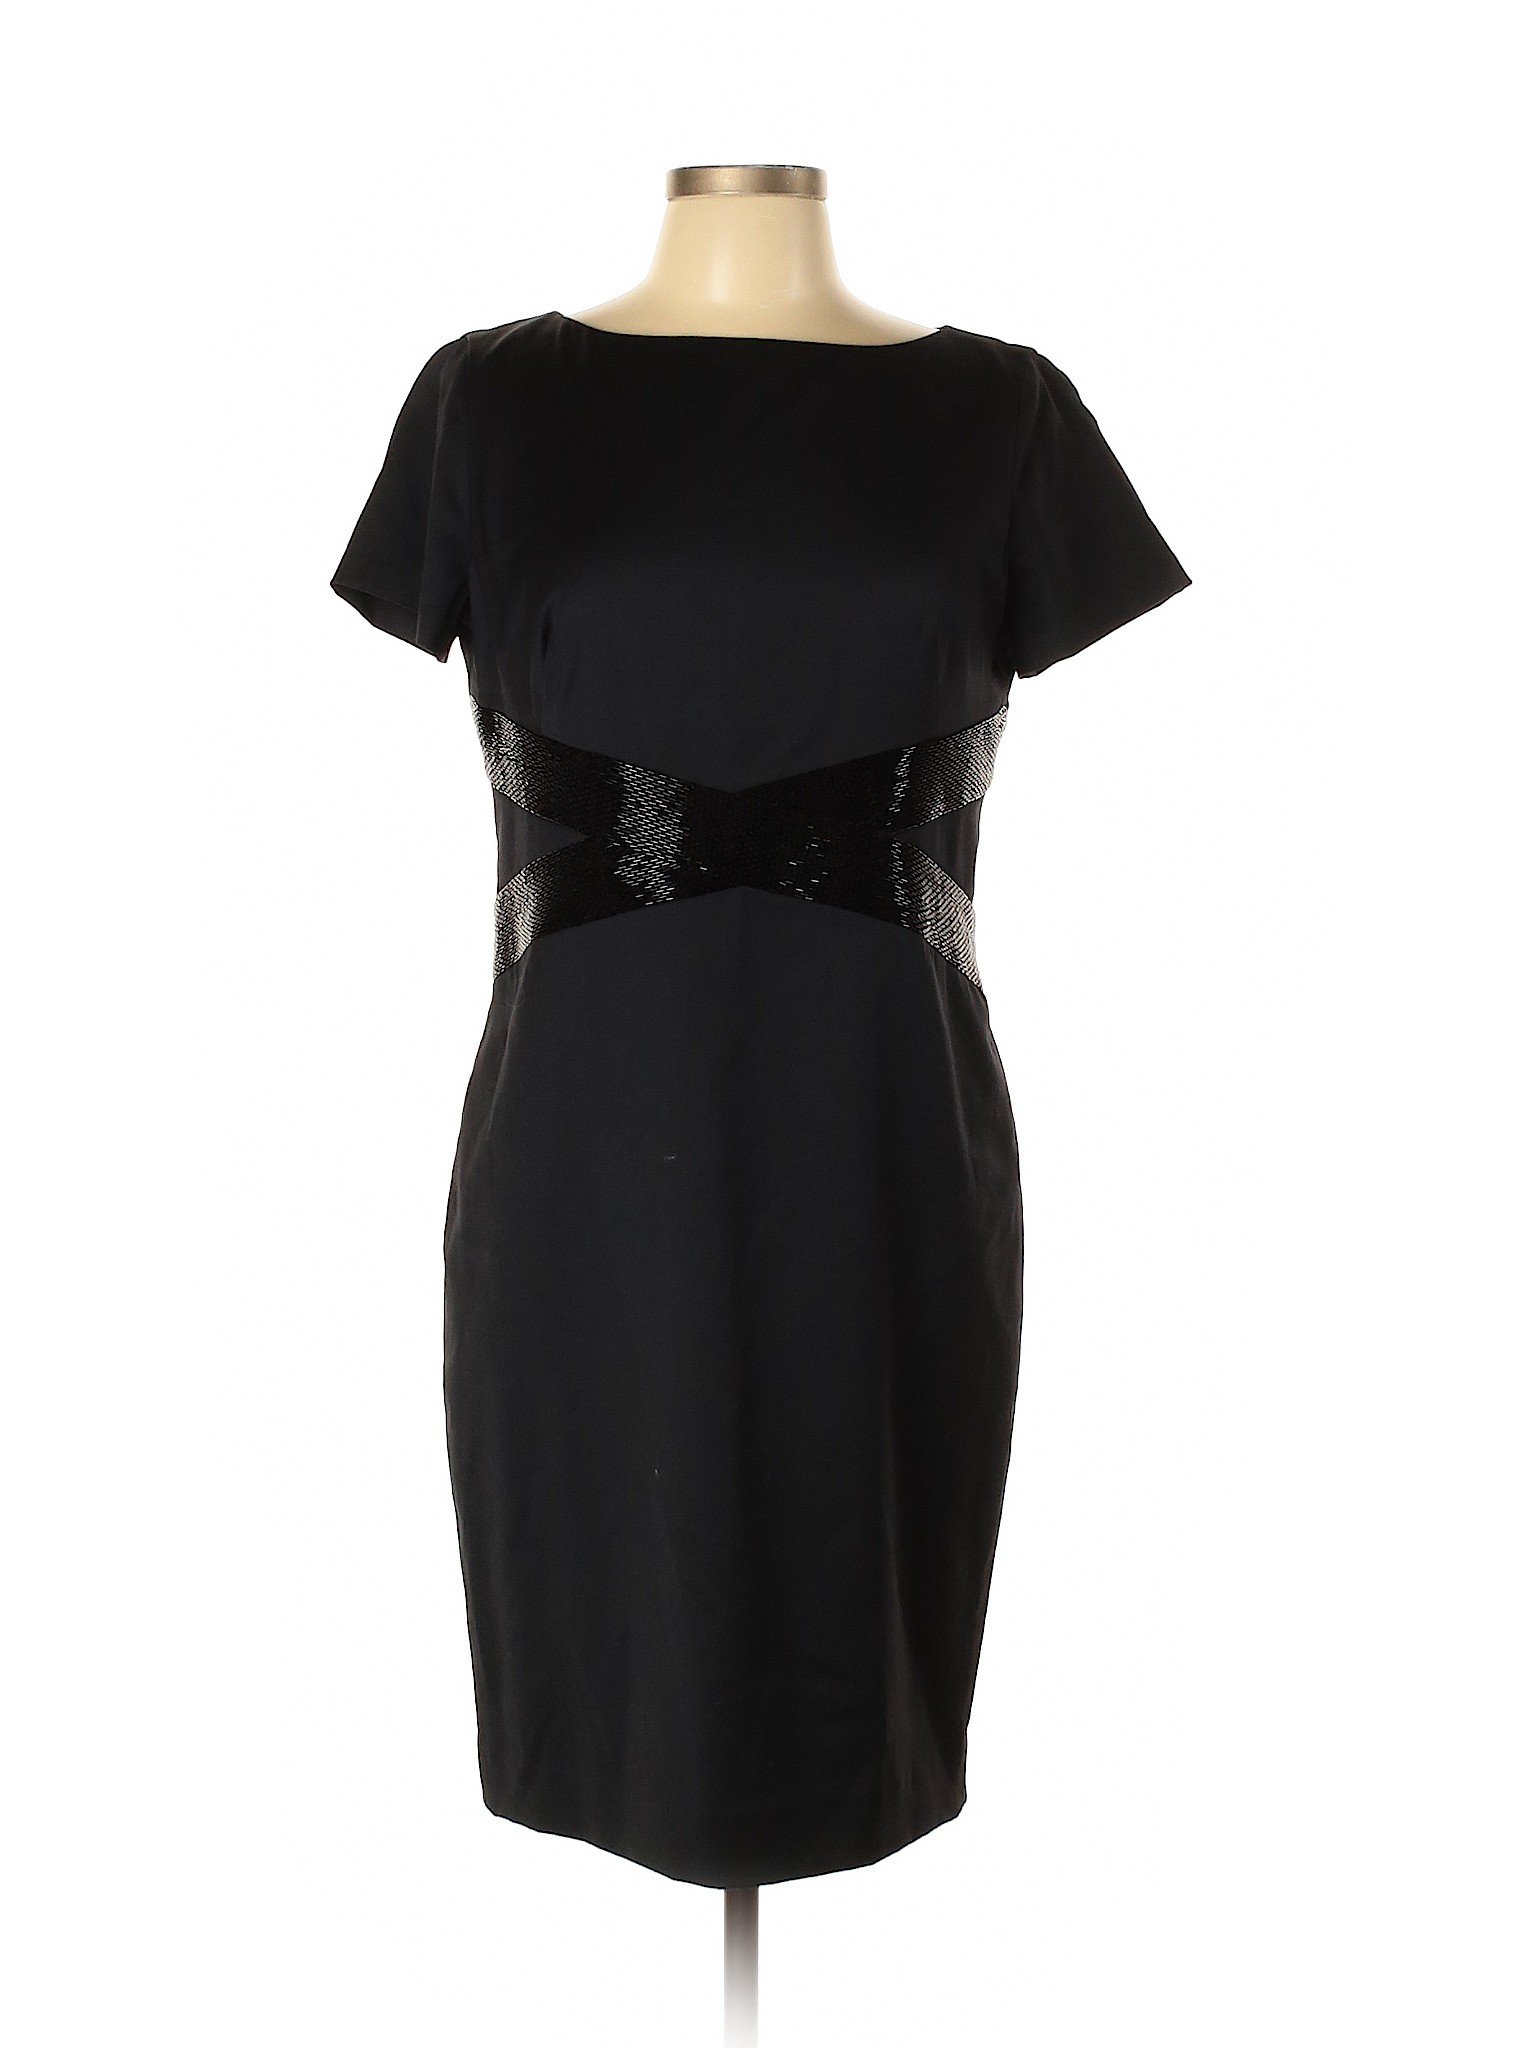 Anne Klein Women Black Cocktail Dress 12 Petites | eBay